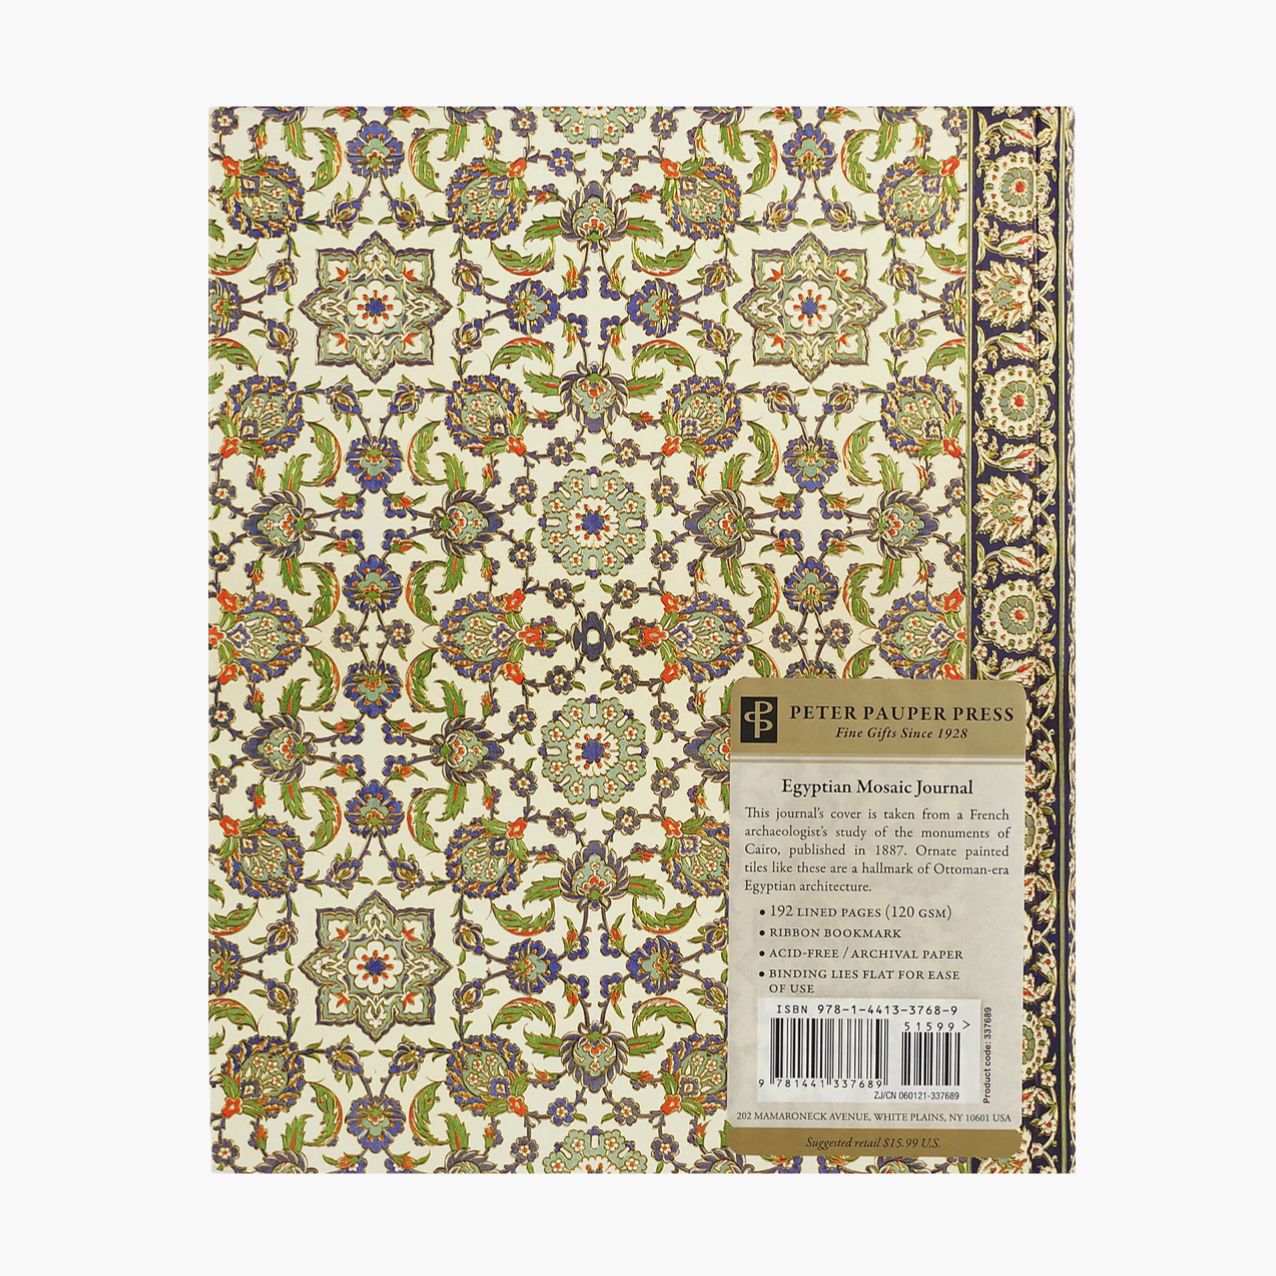 Egyptain Mosaic Journal